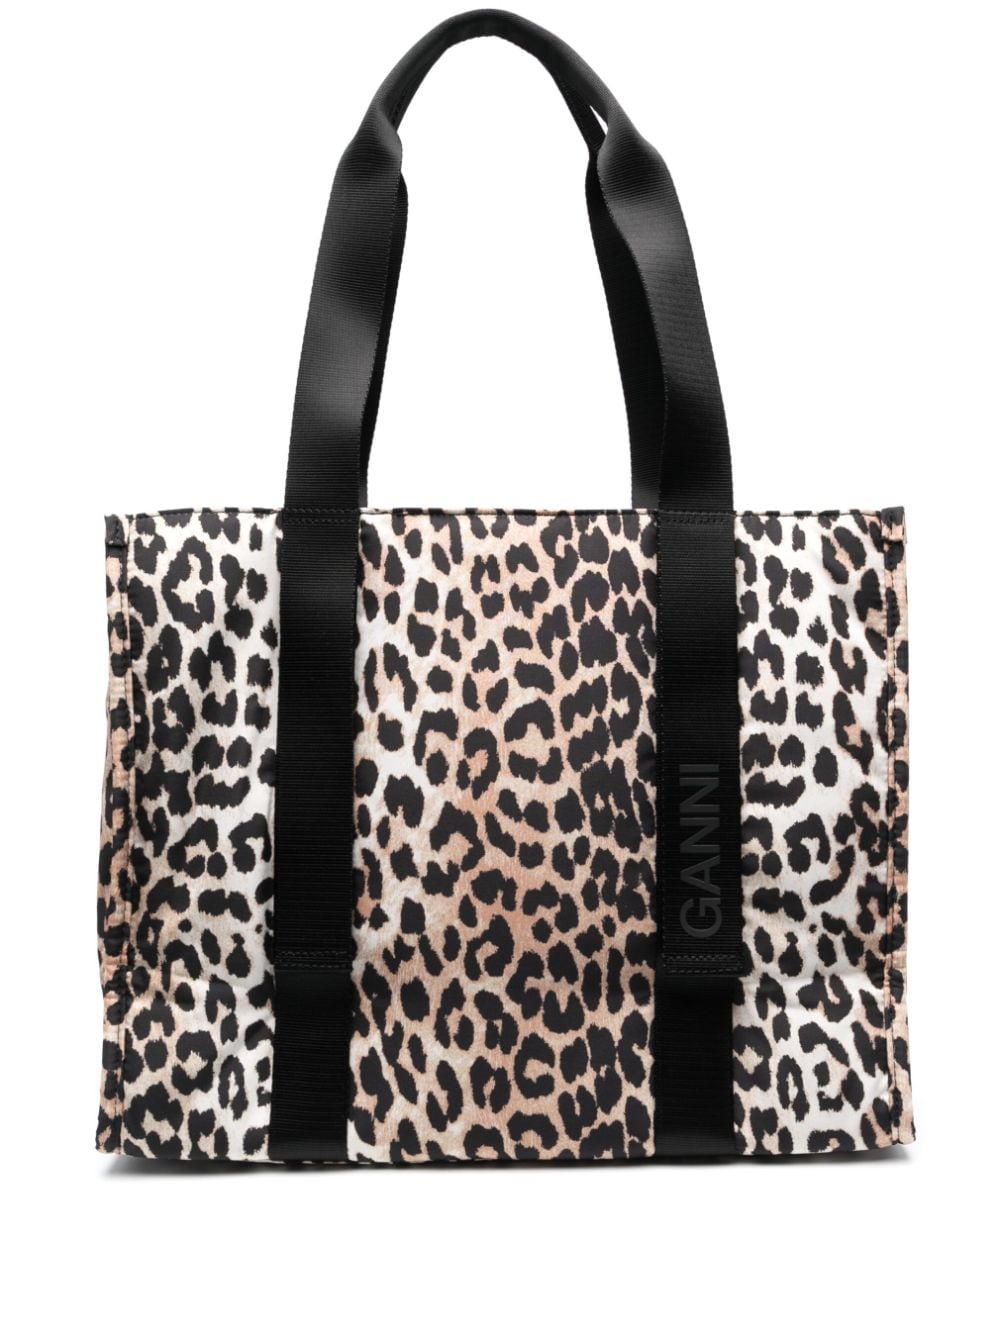 Ganni Leopard-Print Tote Bag